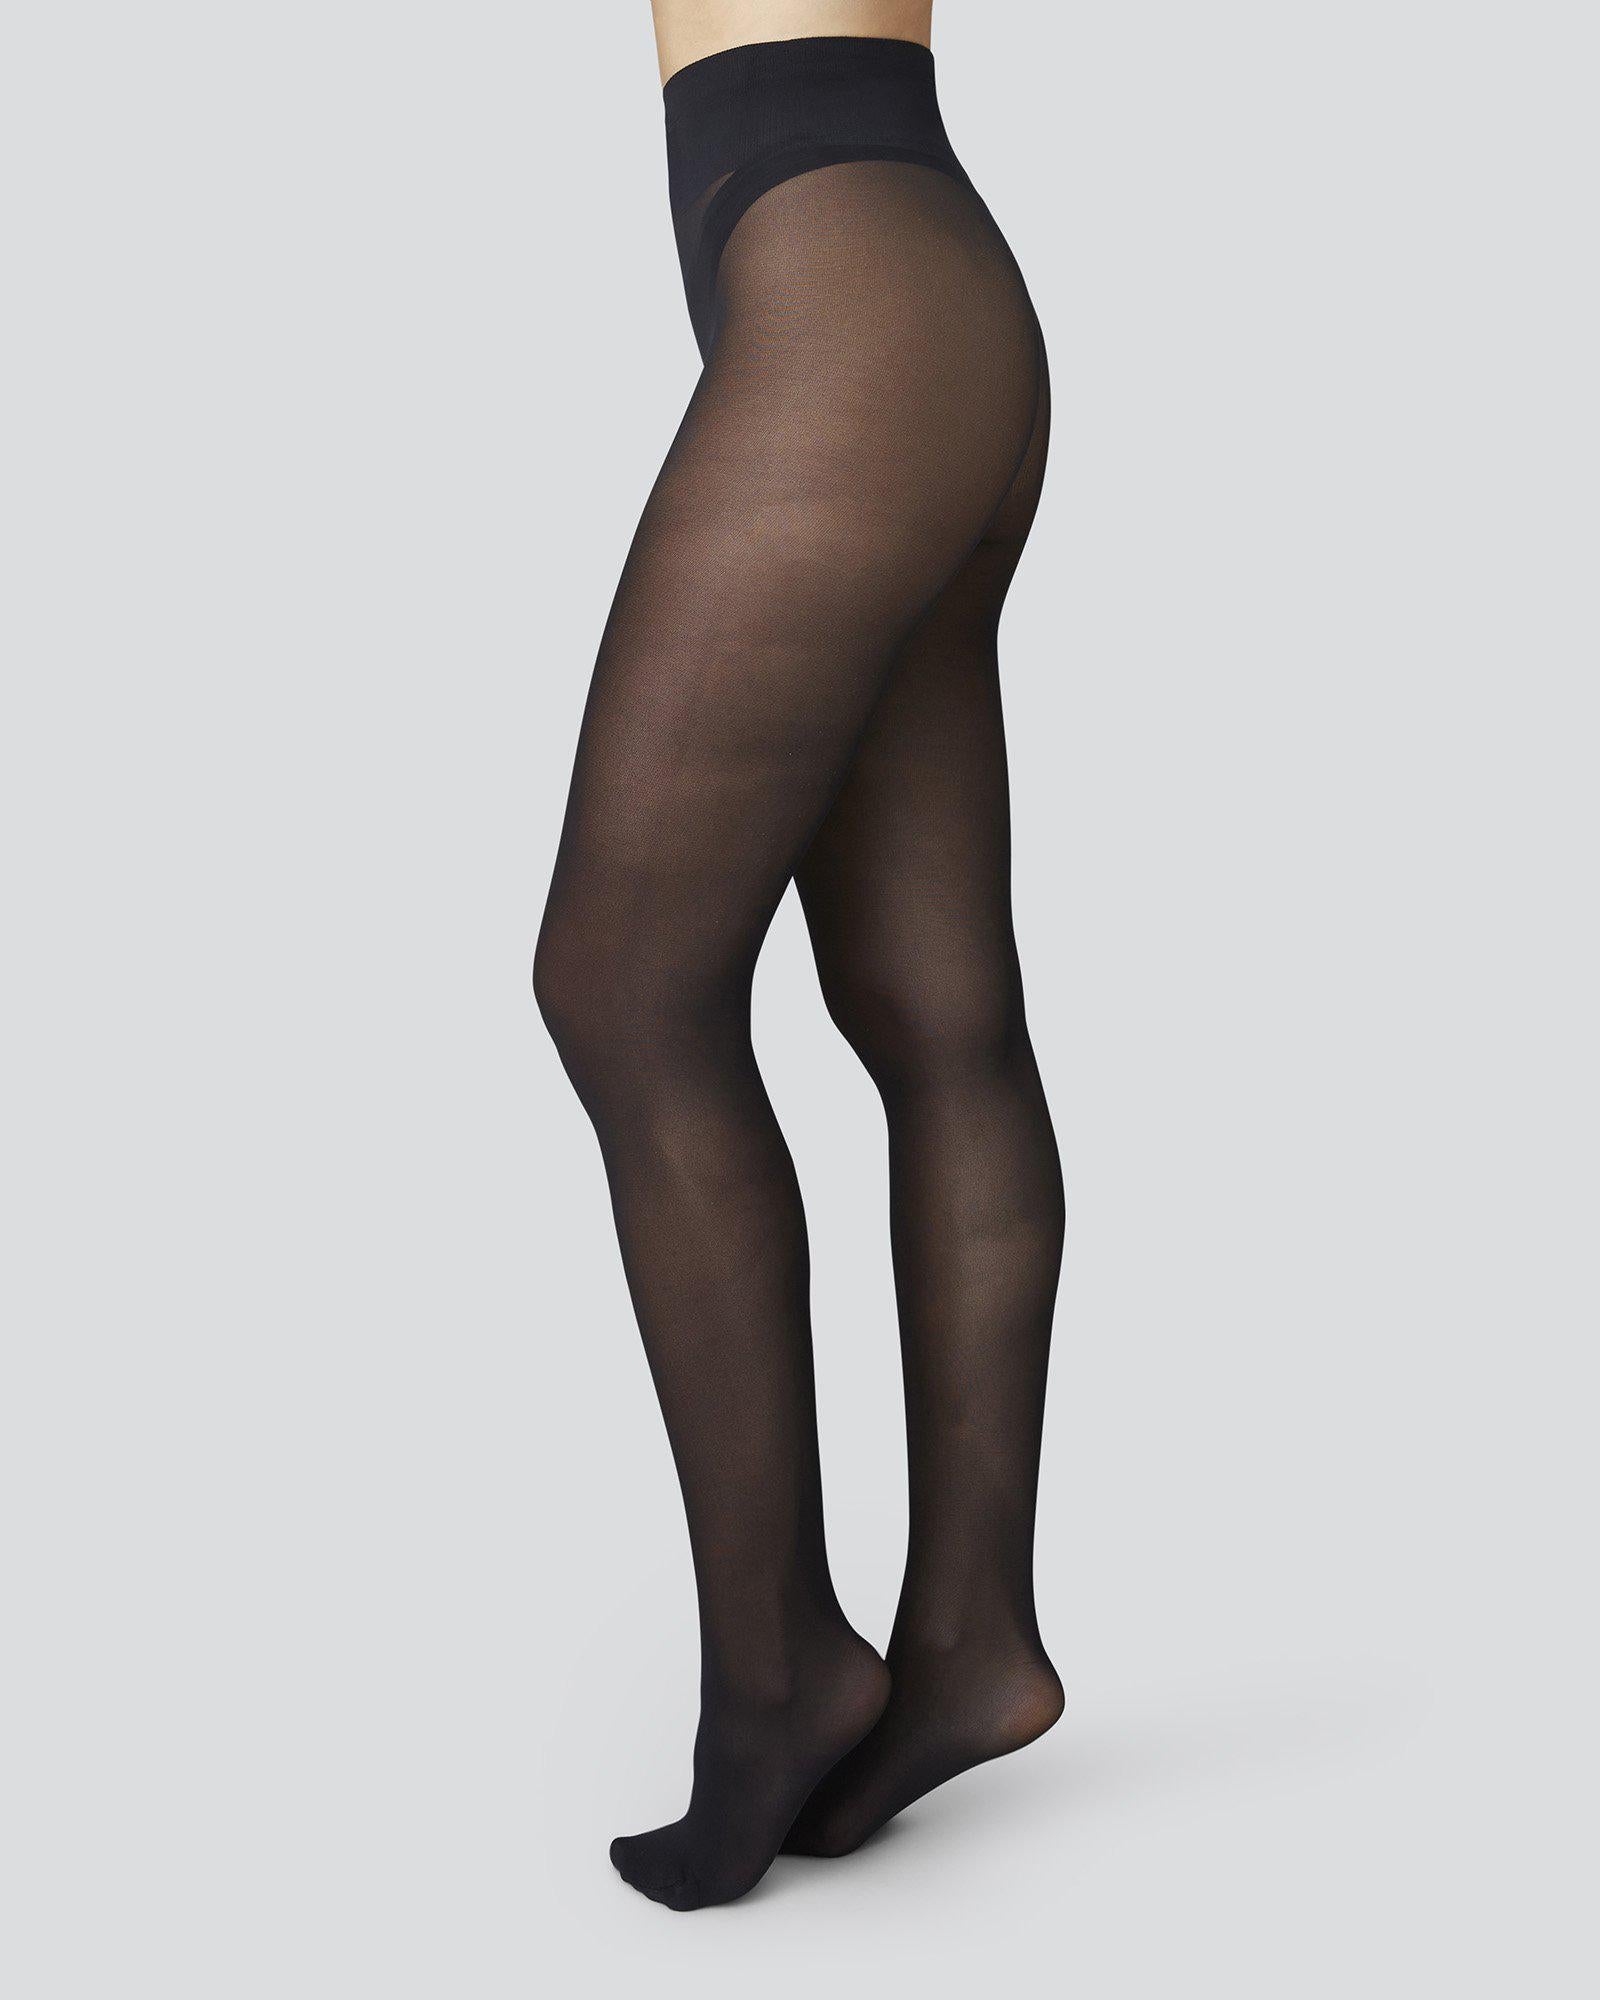 Tights - Black nylon stockings